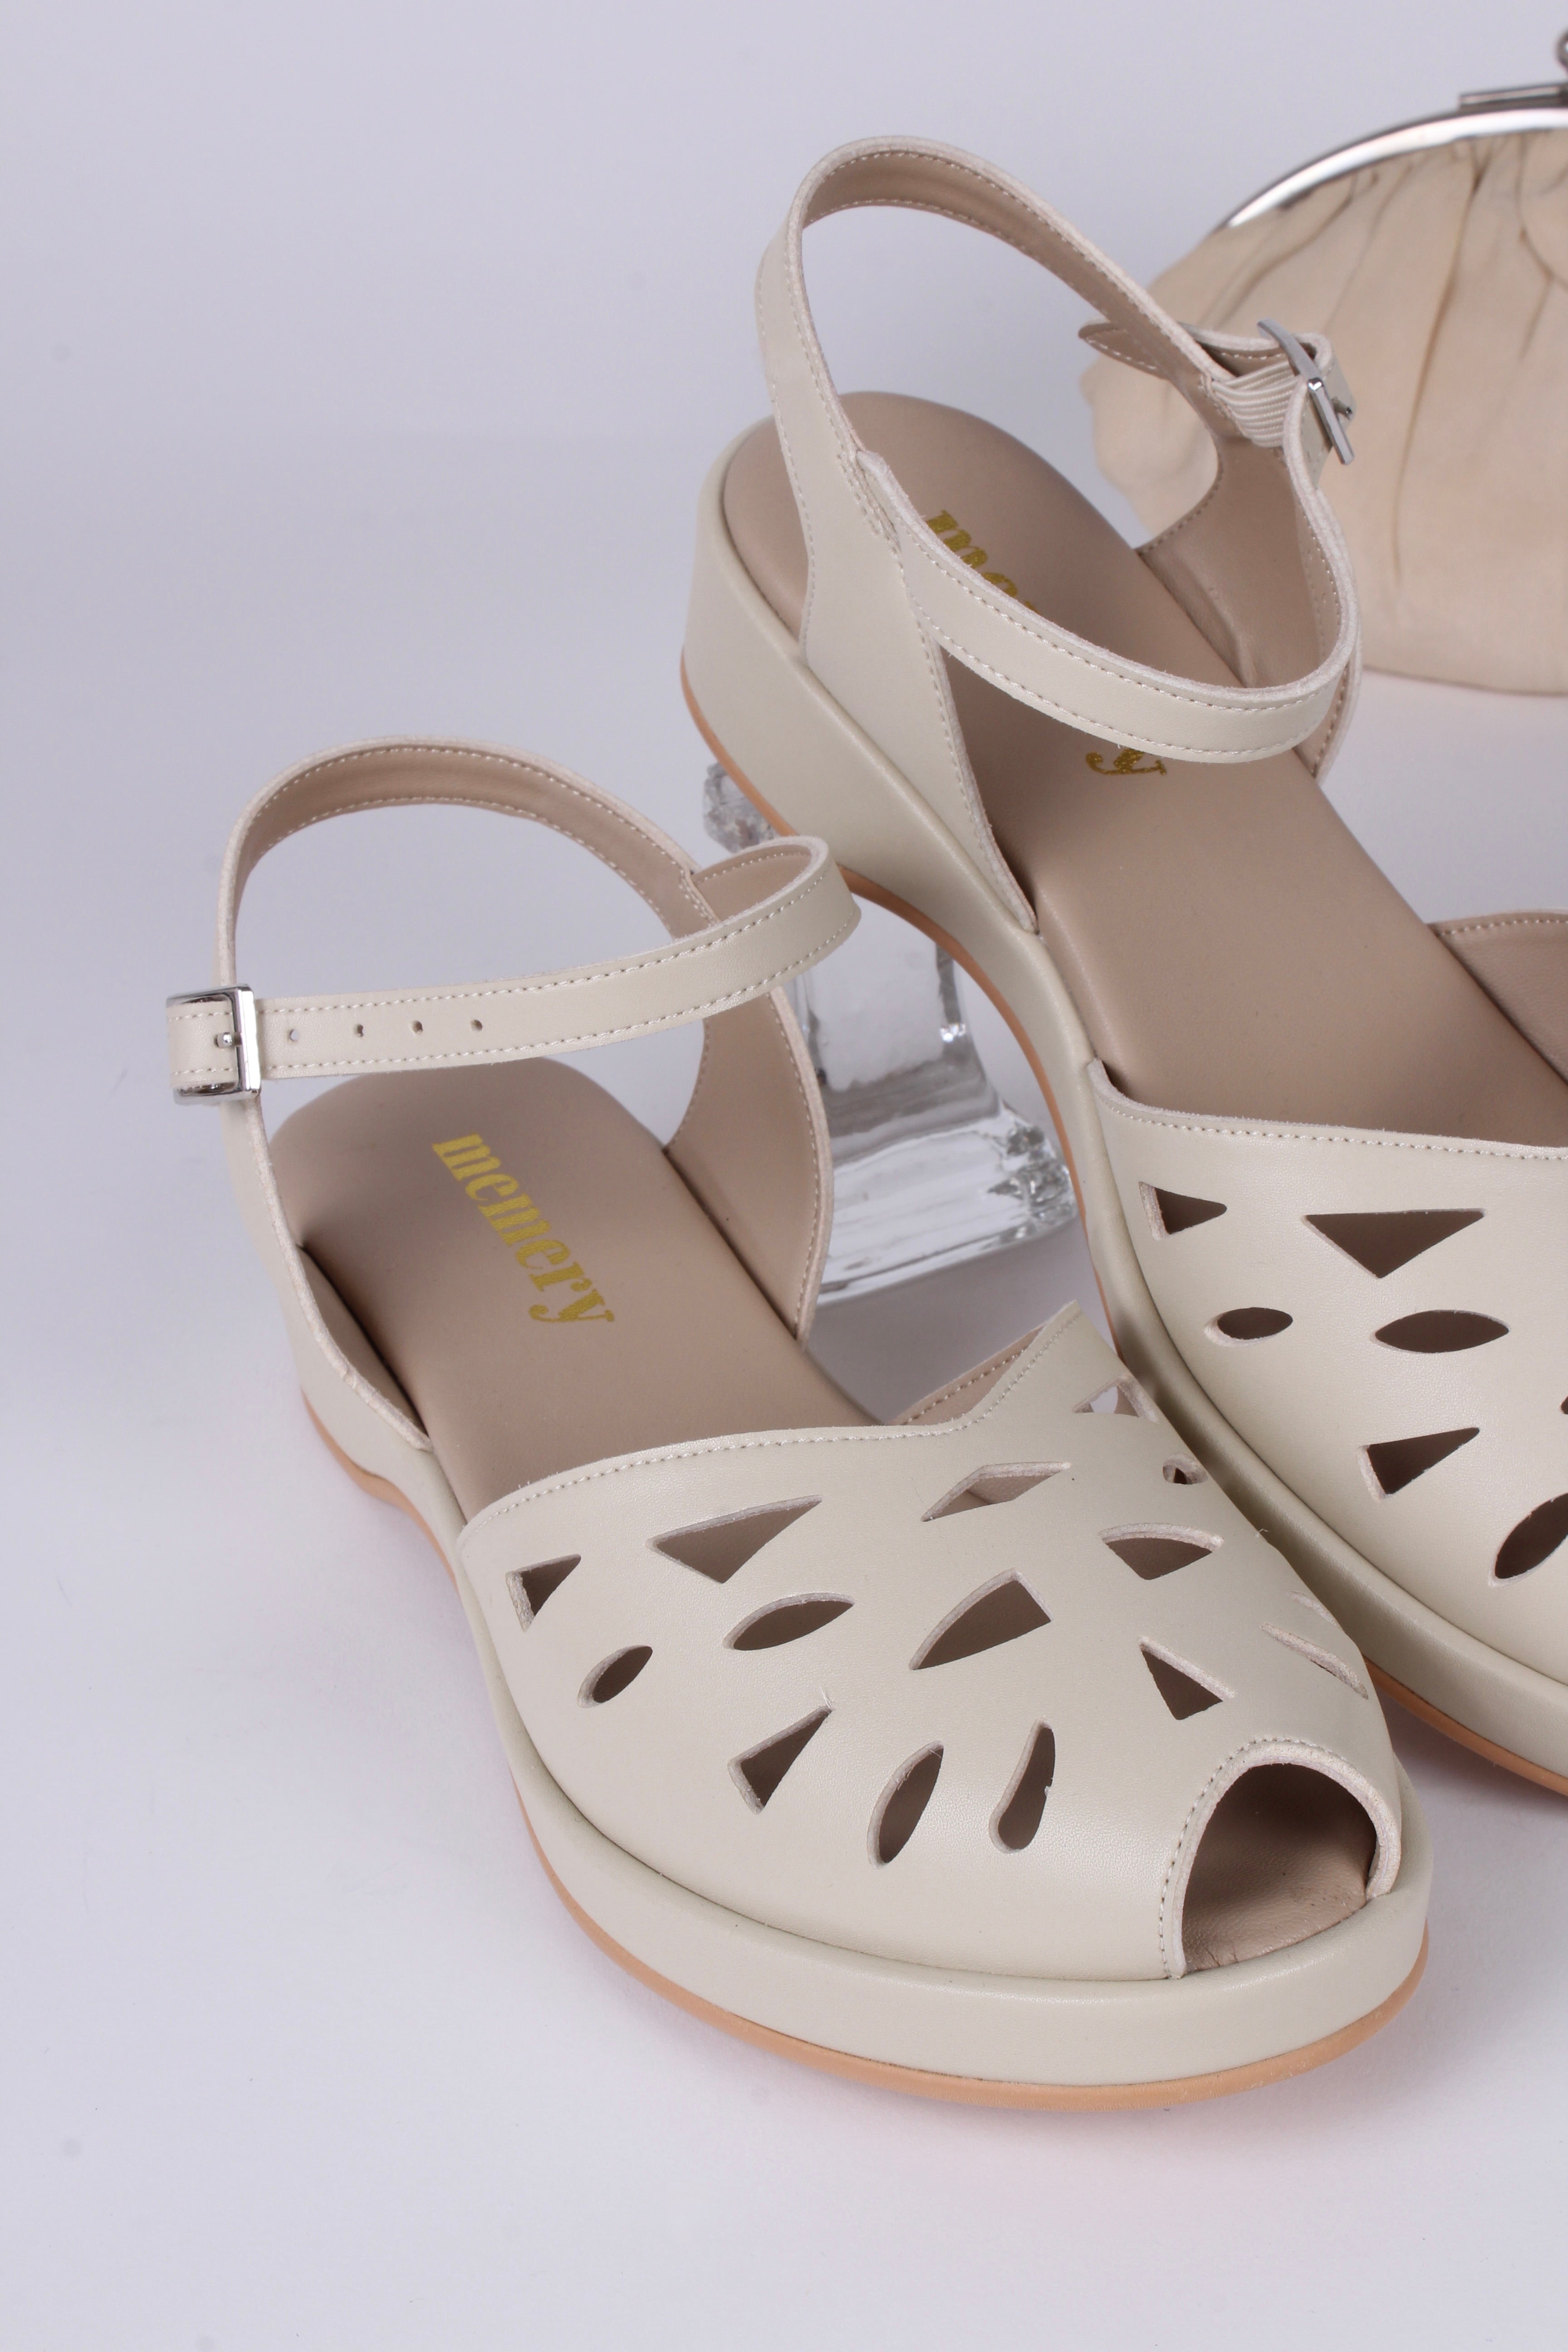 VEGAN - 40'er / 50'er style sandal / wedge - Cream - Sidse